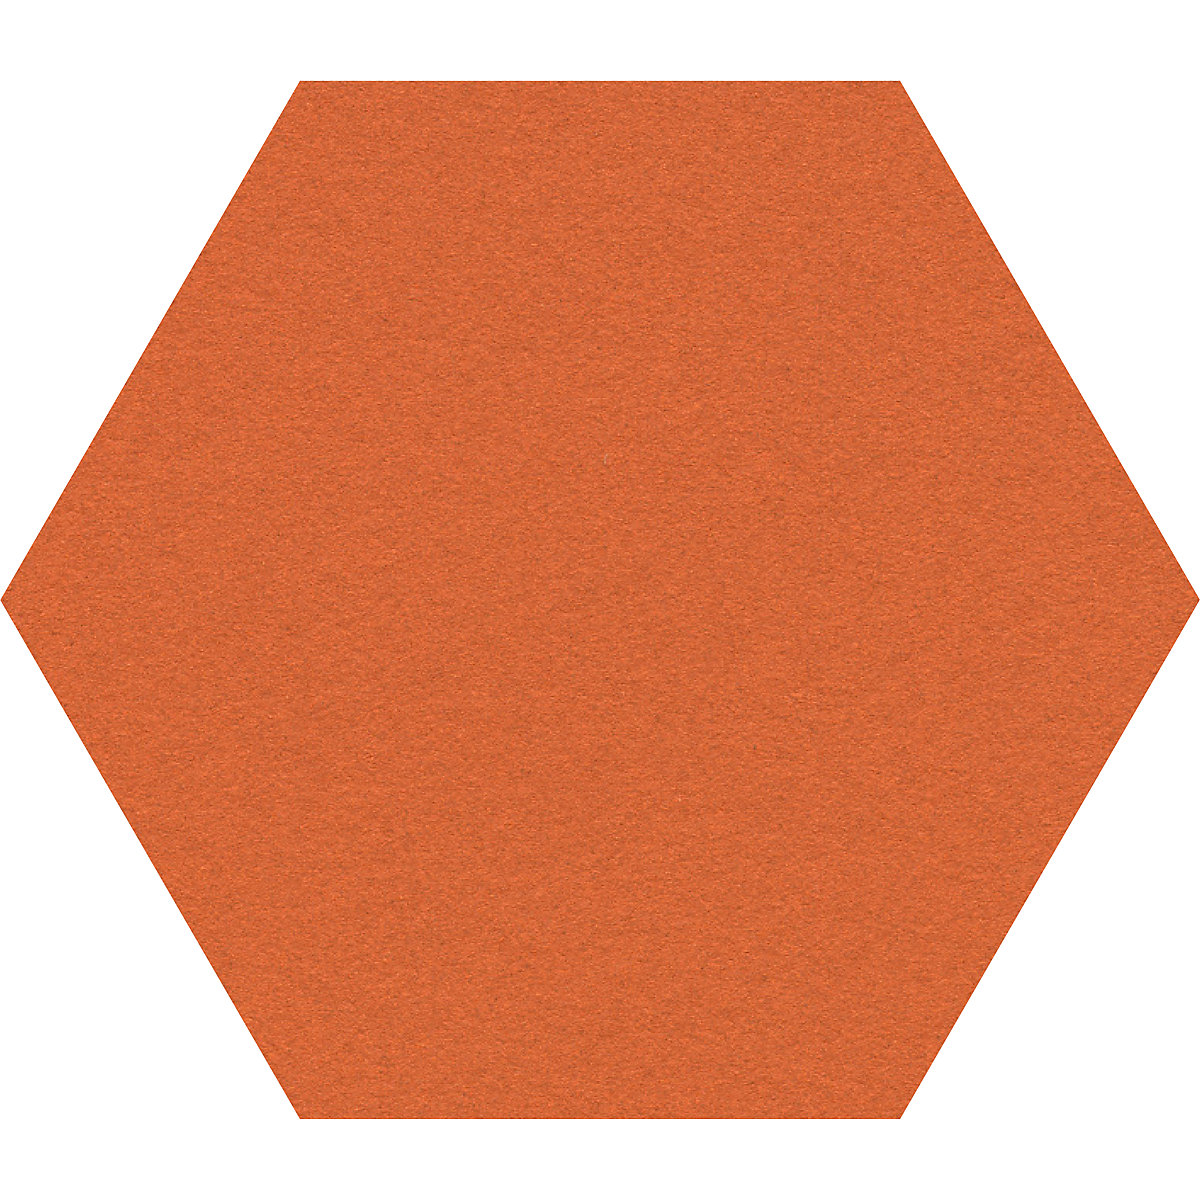 Design-Pinnwand sechseckig Chameleon, Kork, BxH 600 x 600 mm, orange-25